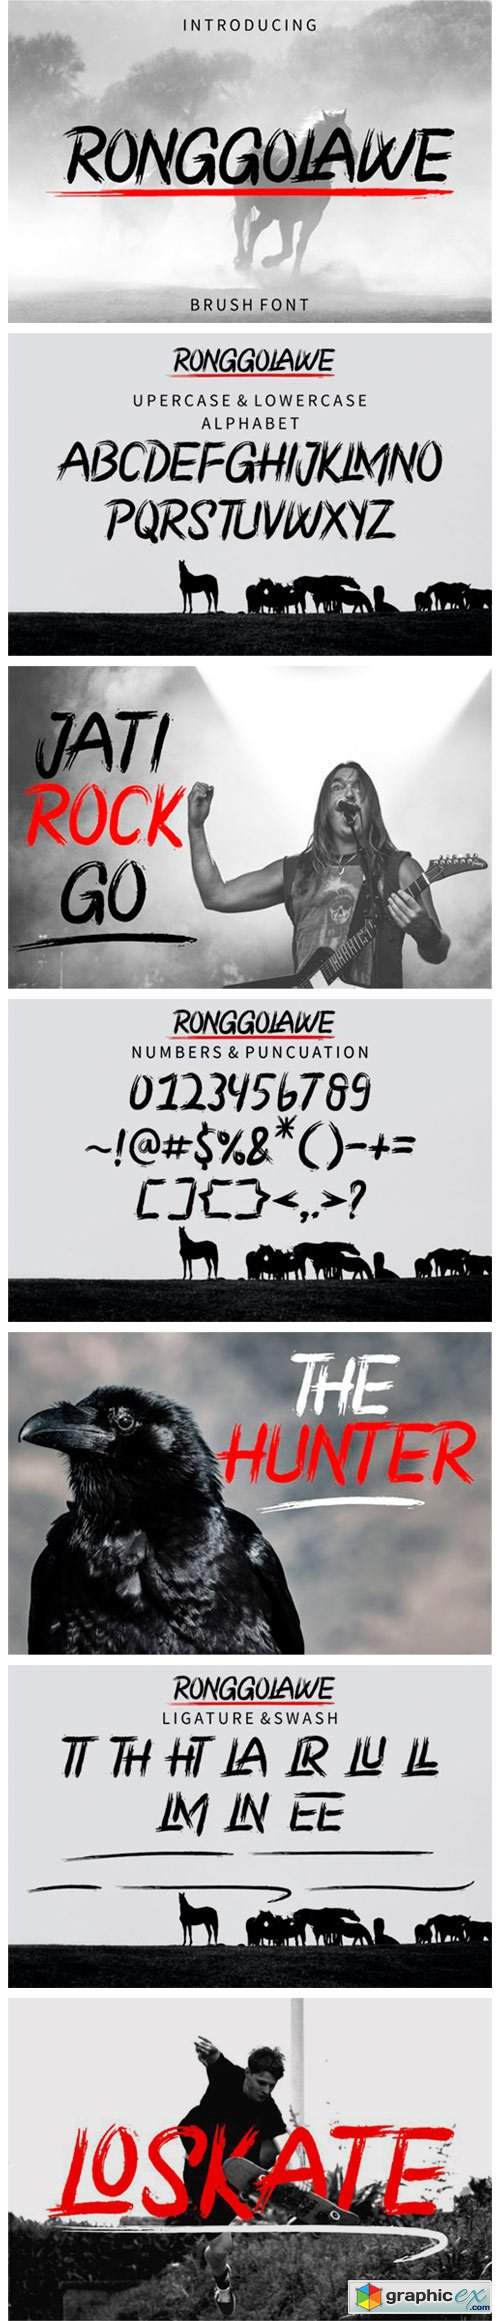  Ronggolawe Font 